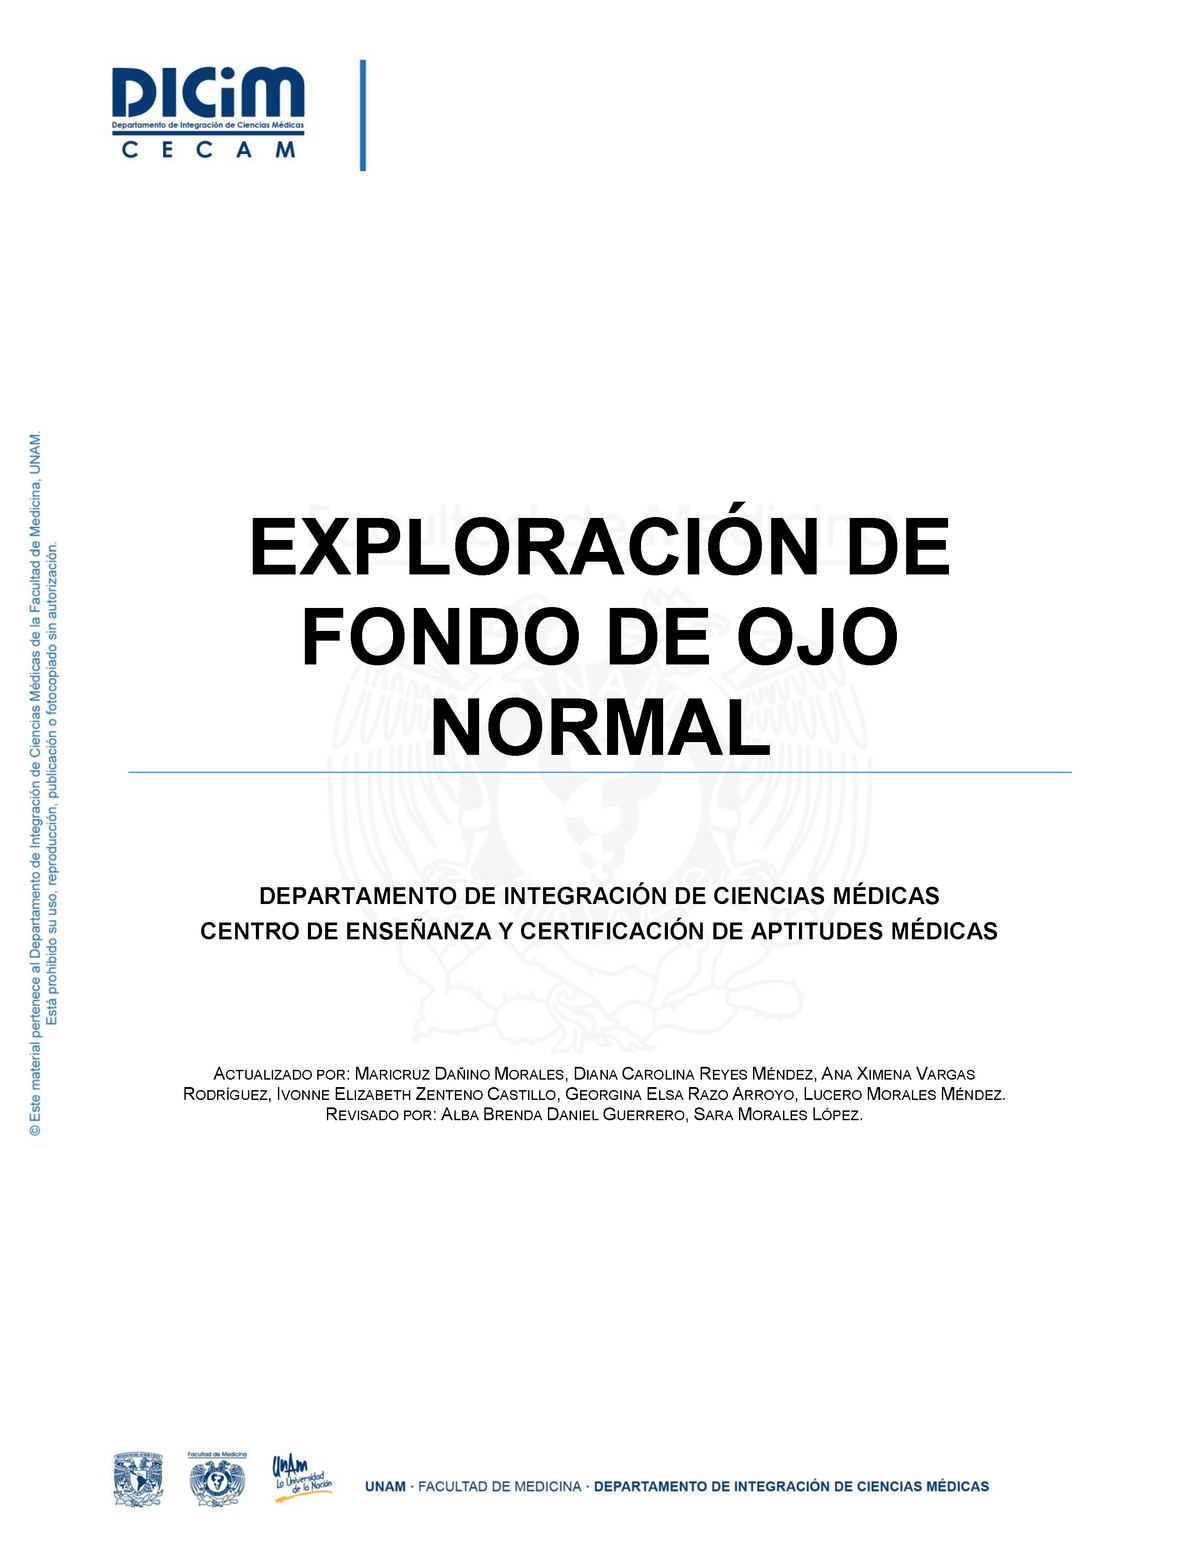 Exploracion DE Fondo DE OJO Normal - EXPLORACIÓN DE FONDO DE OJO NORMAL  DEPARTAMENTO DE INTEGRACIÓN - Studocu